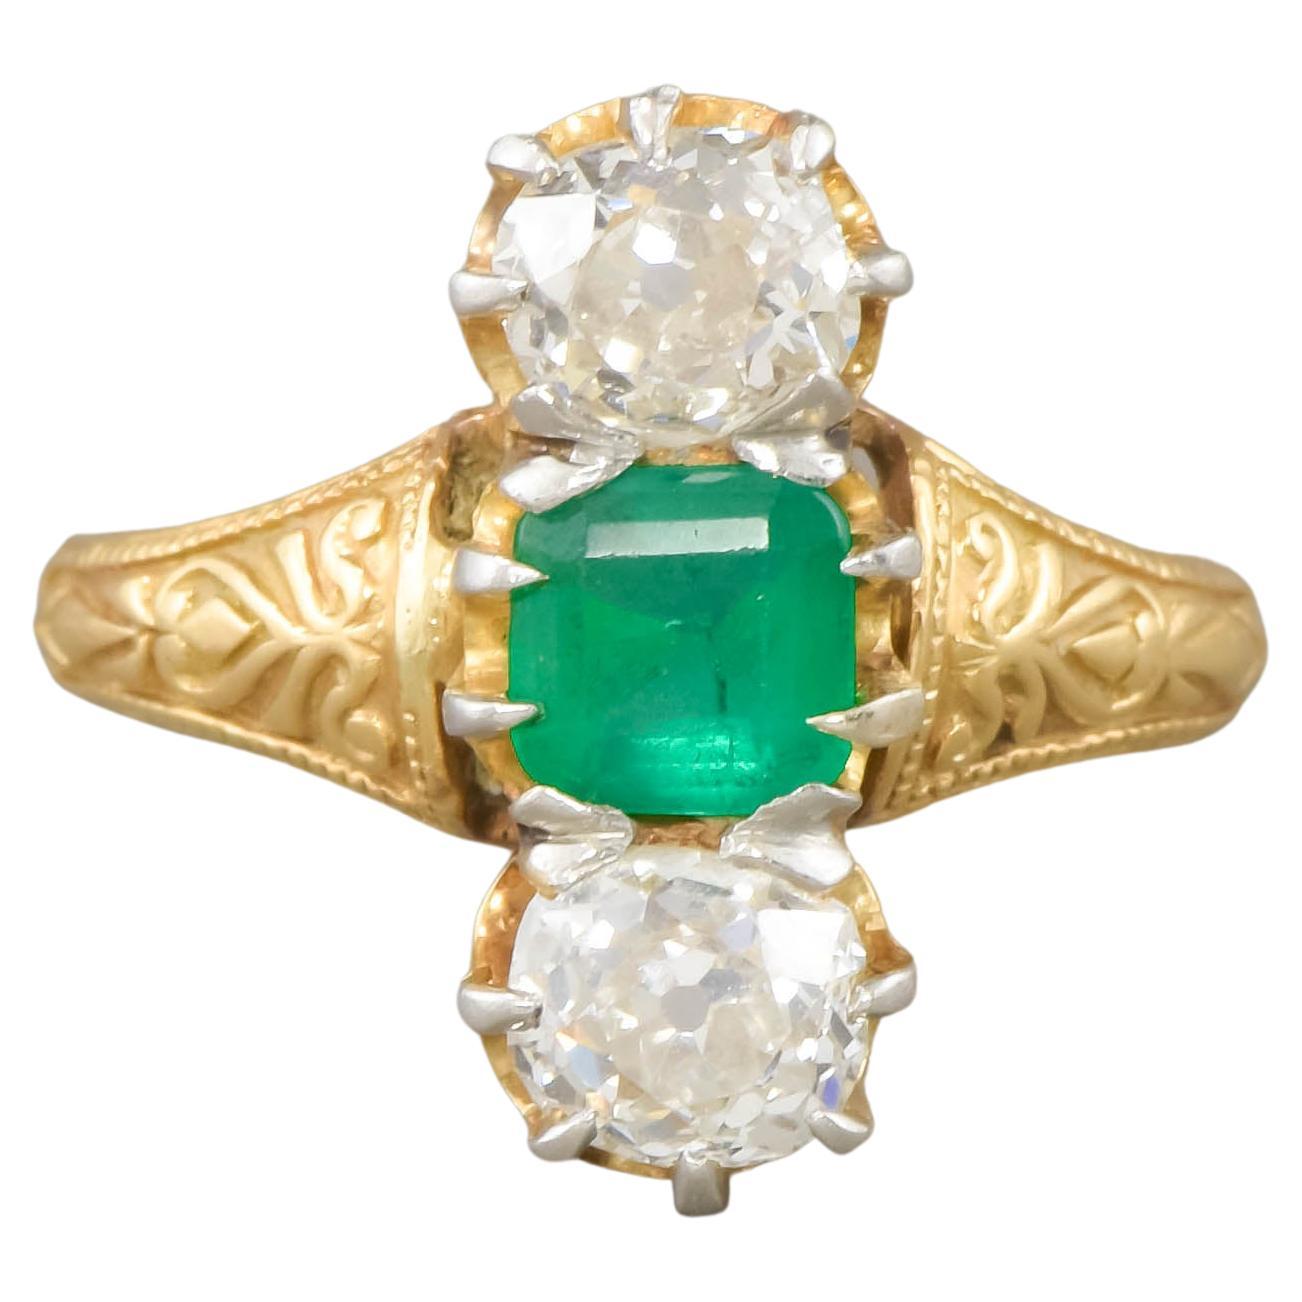 Antique Old Mine Cut Diamond & Emerald Ring in 18K Gold